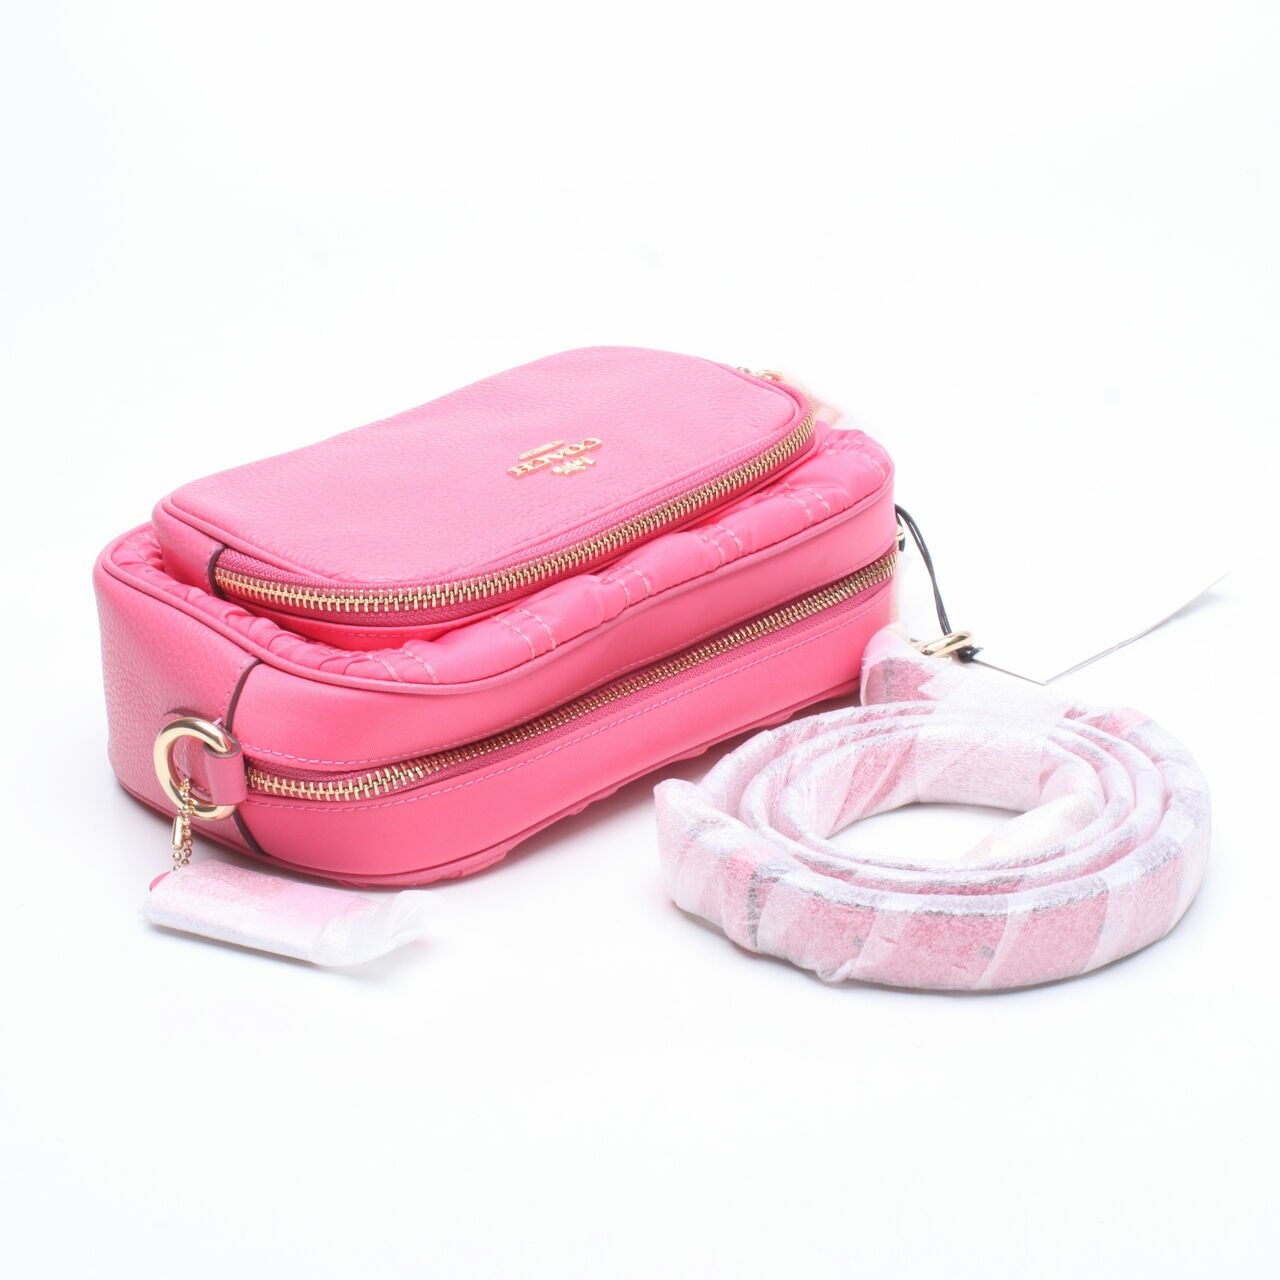 Coach C4095 Court Crossbody Leather Handbag With Ruching Confetti Pink